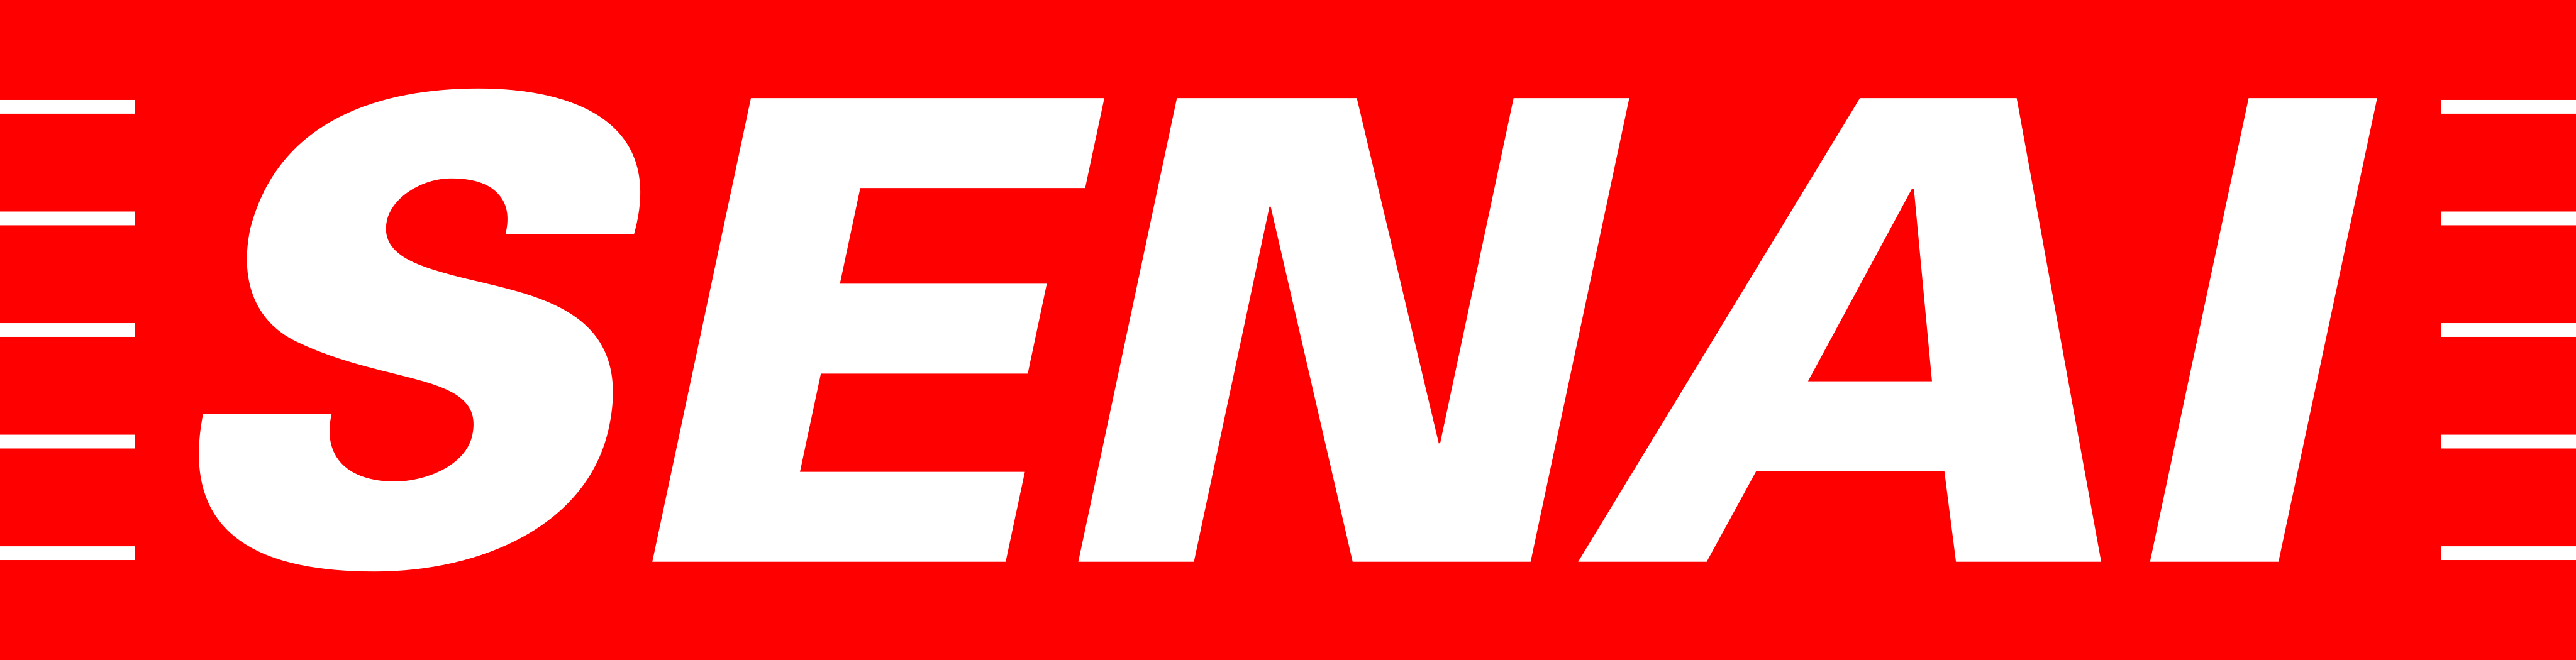 SENAI Logo.